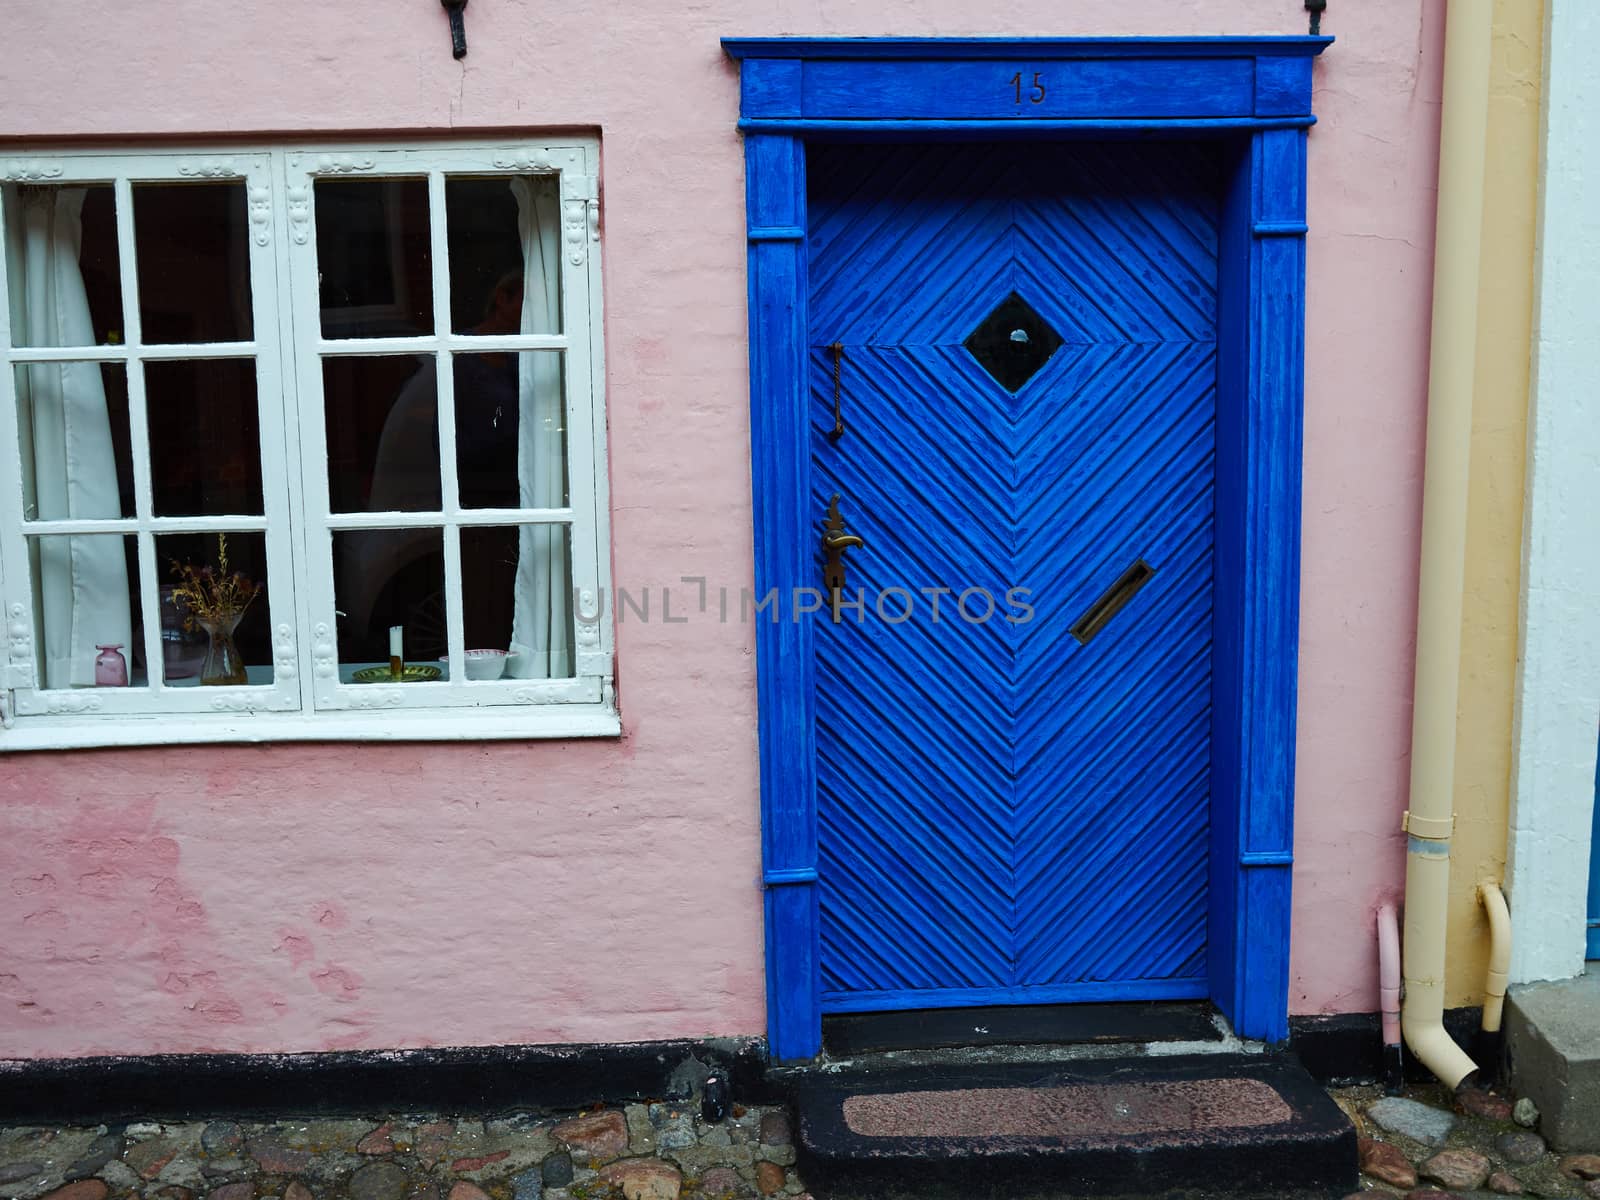 Traditional colorful craft vintage wooden blue front door Denmark